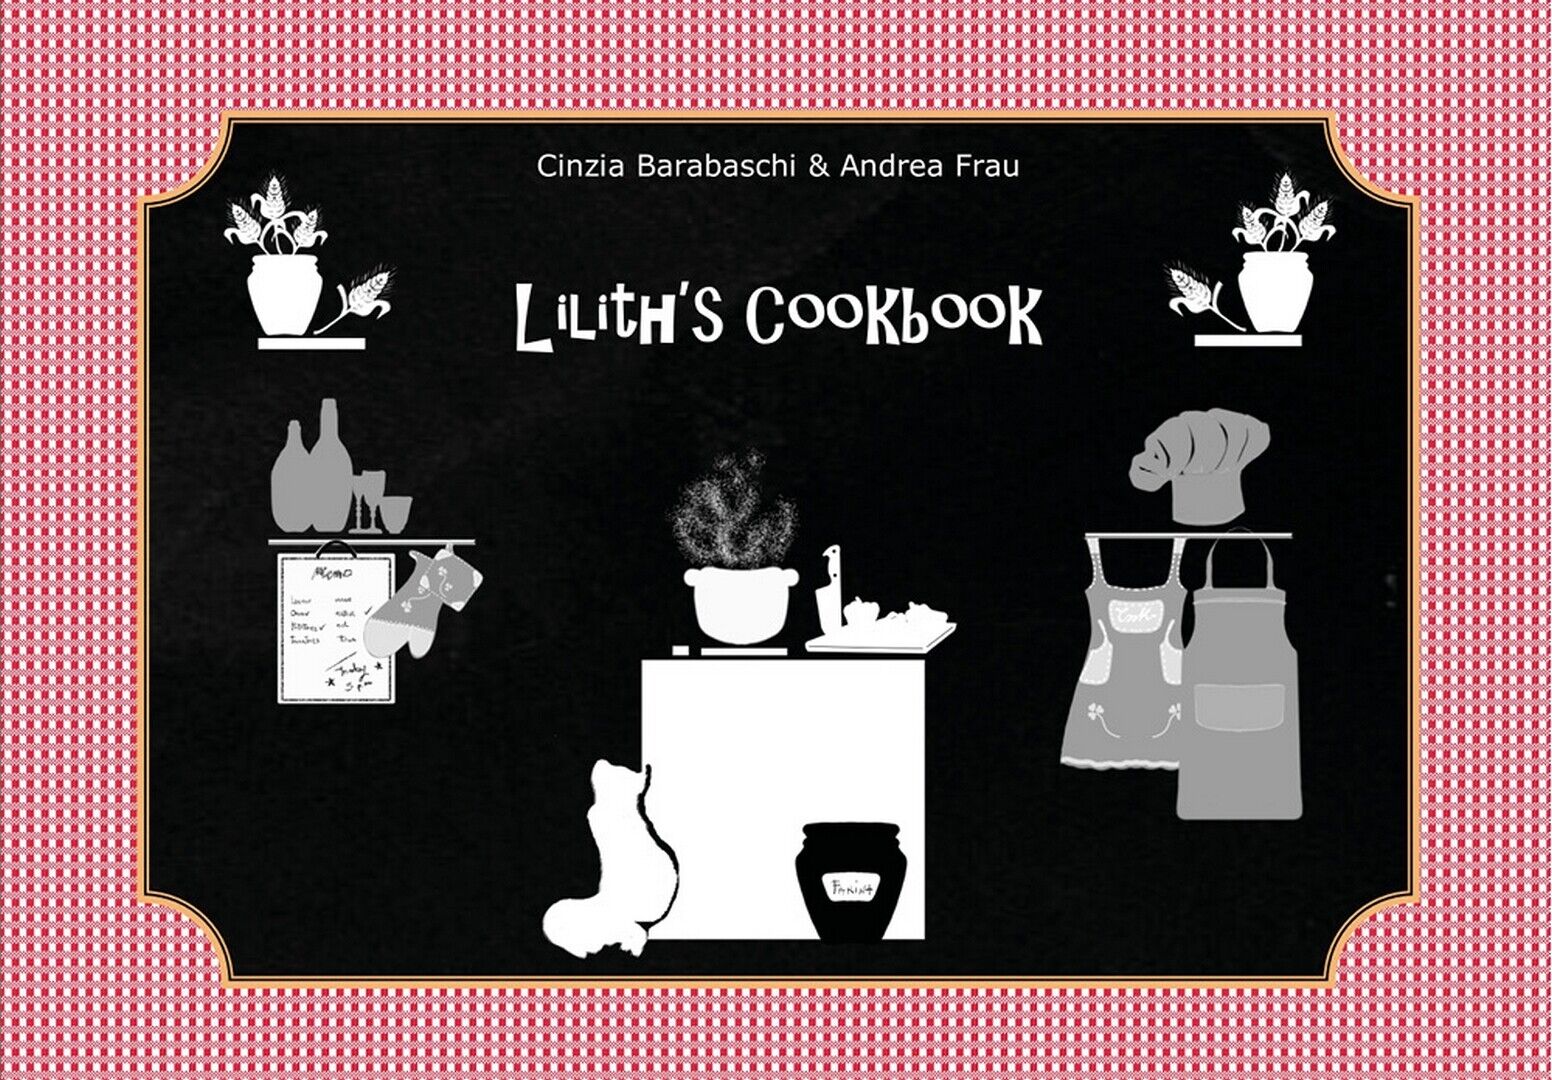 Lilith?s Cookbook  di Cinzia Barabaschi, Andrea Frau,  2021,  Youcanprint